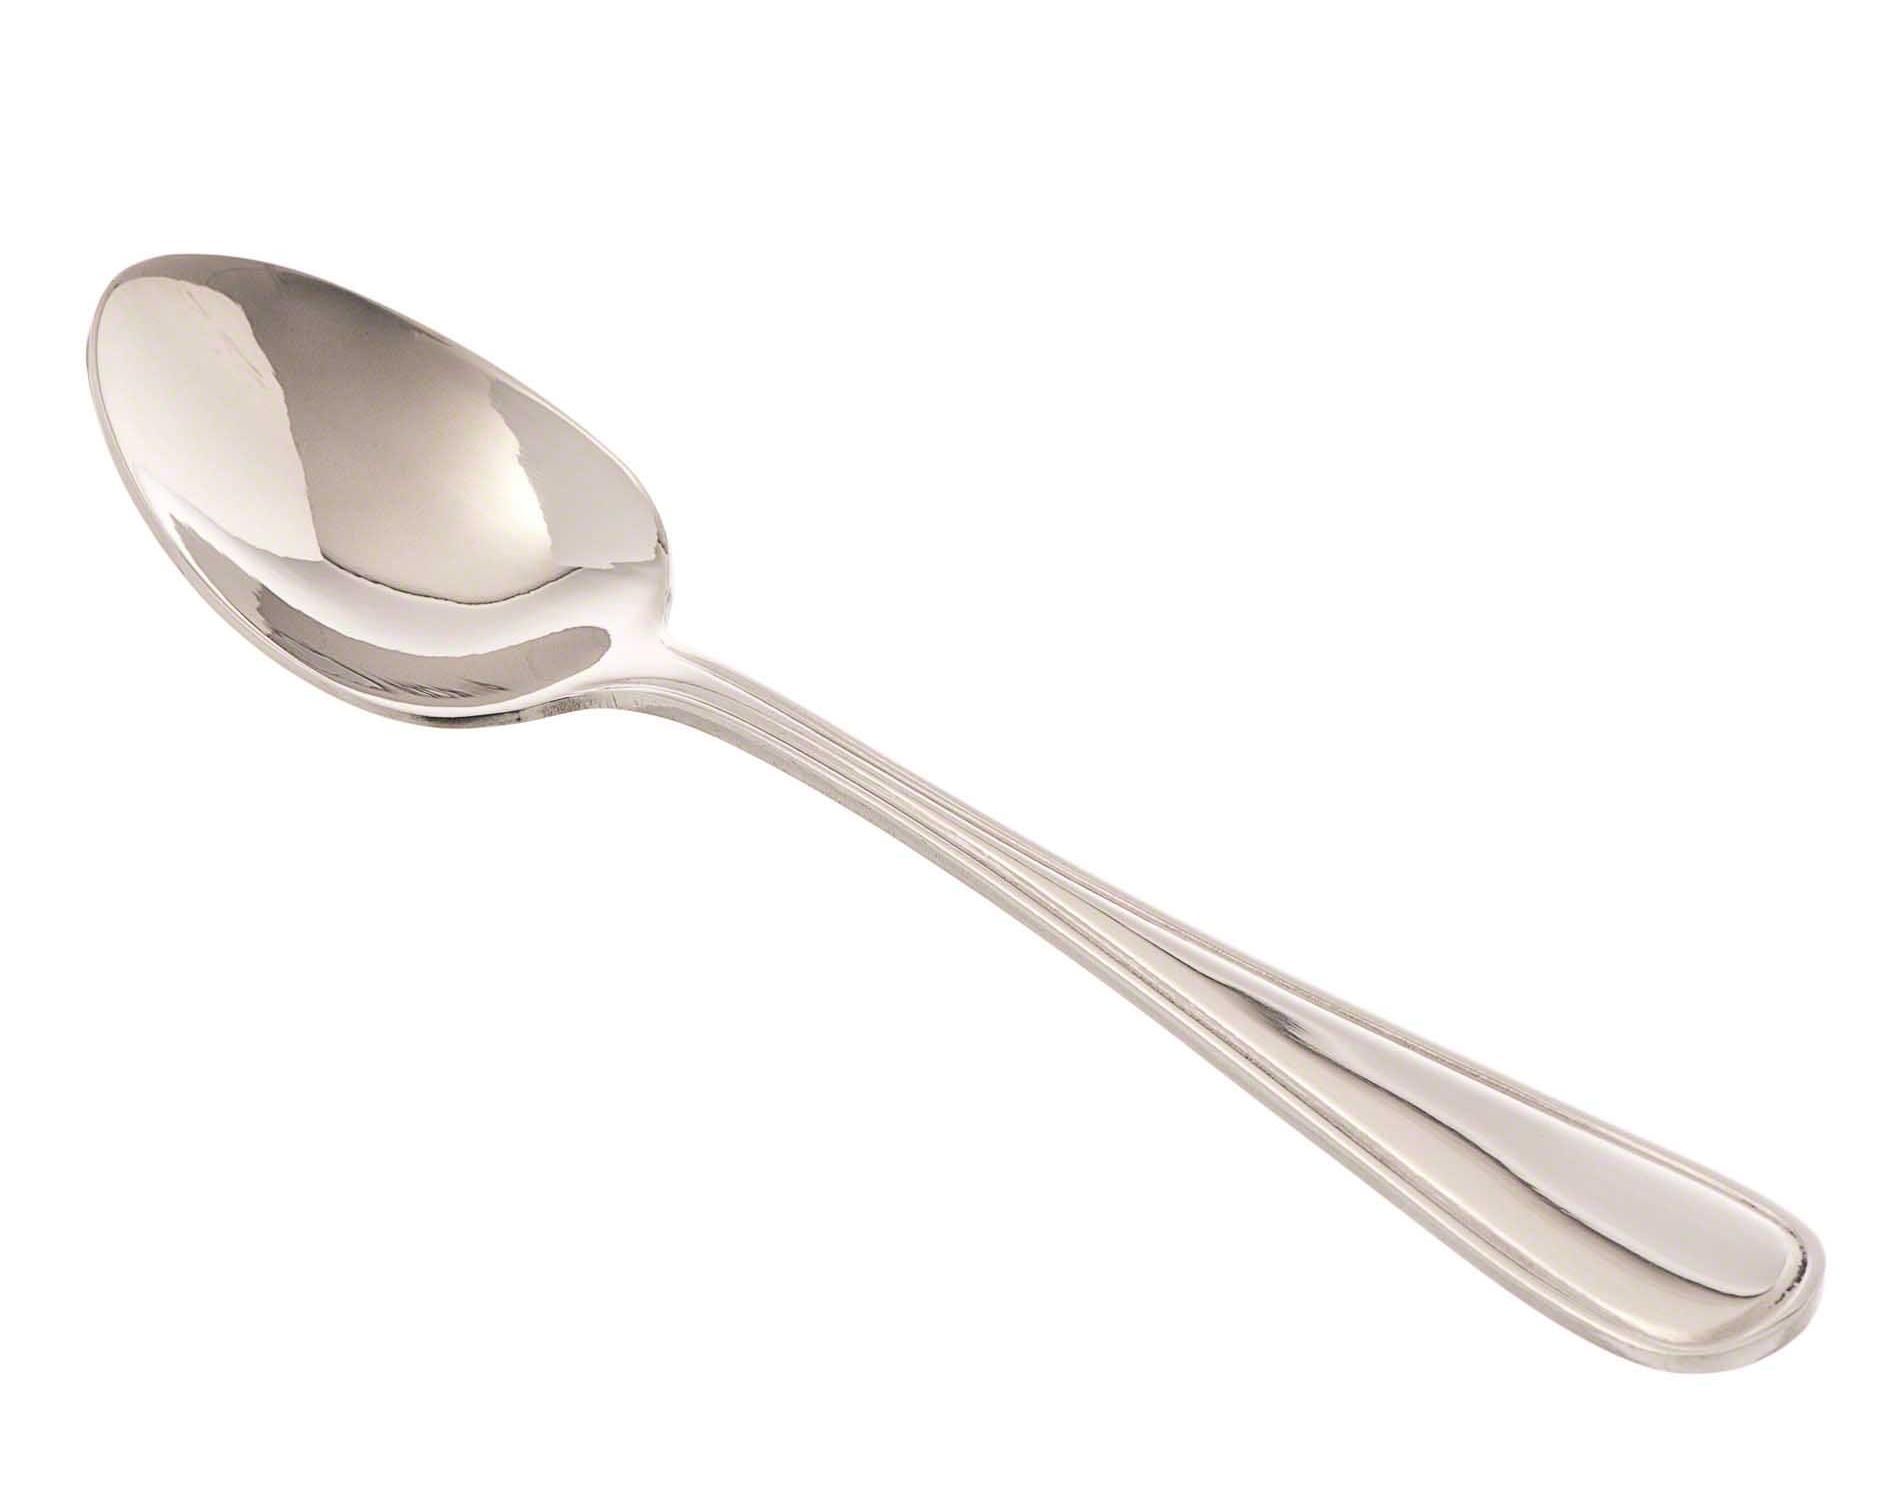 tsb meaning teaspoon